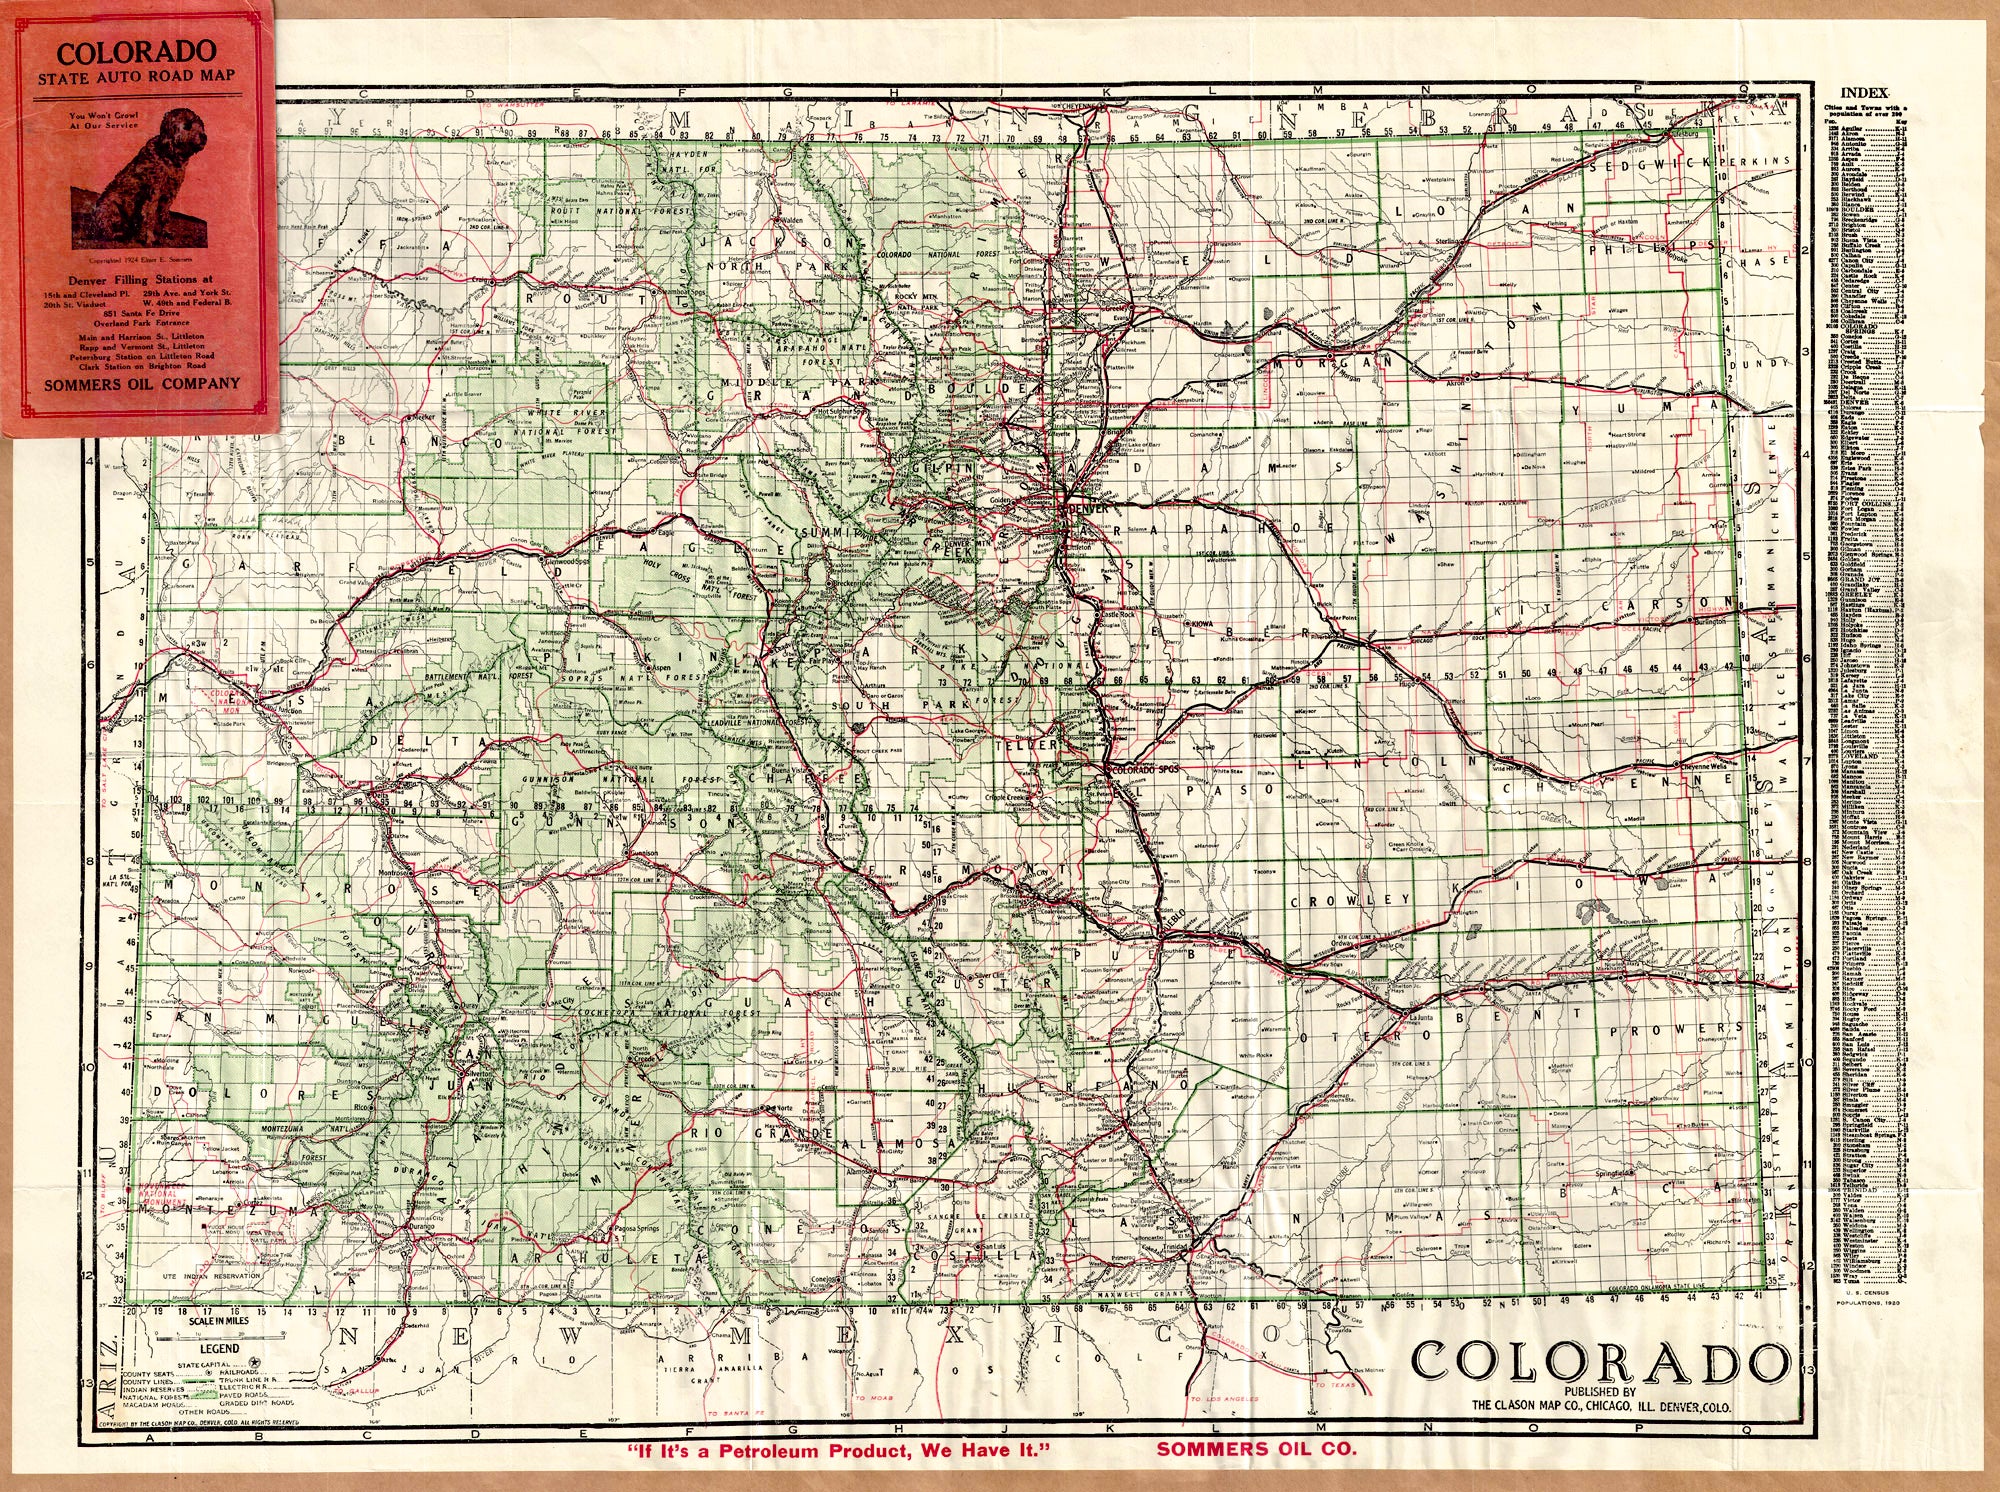 (CO.) Colorado State Auto Road Map